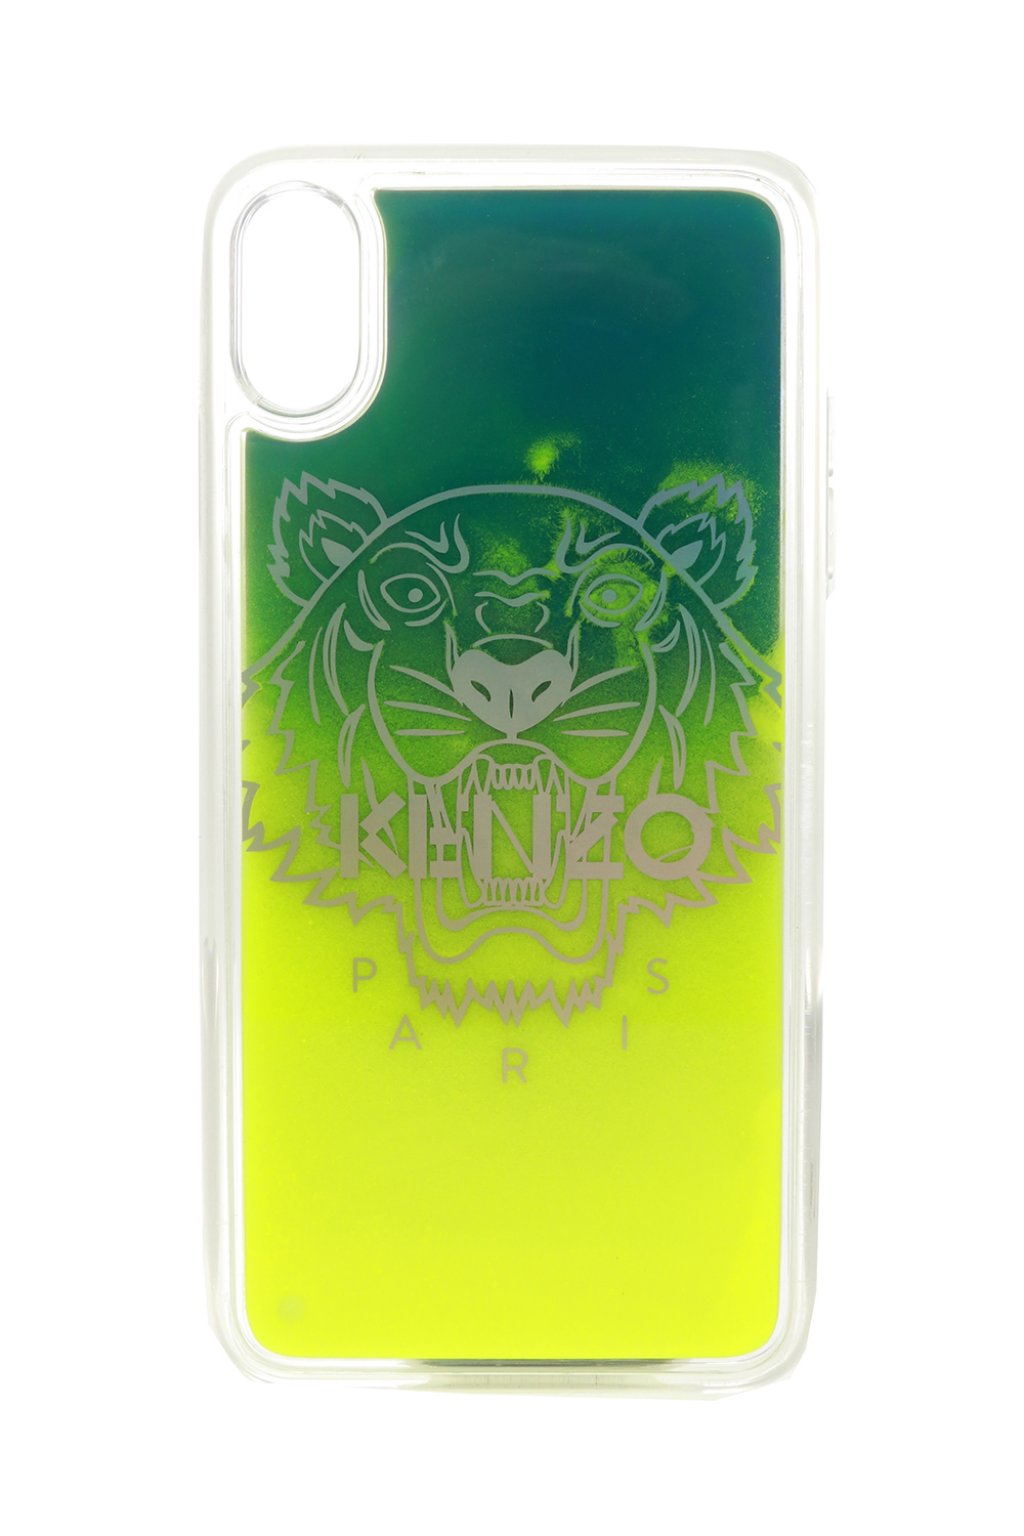 kenzo phone case iphone xs max